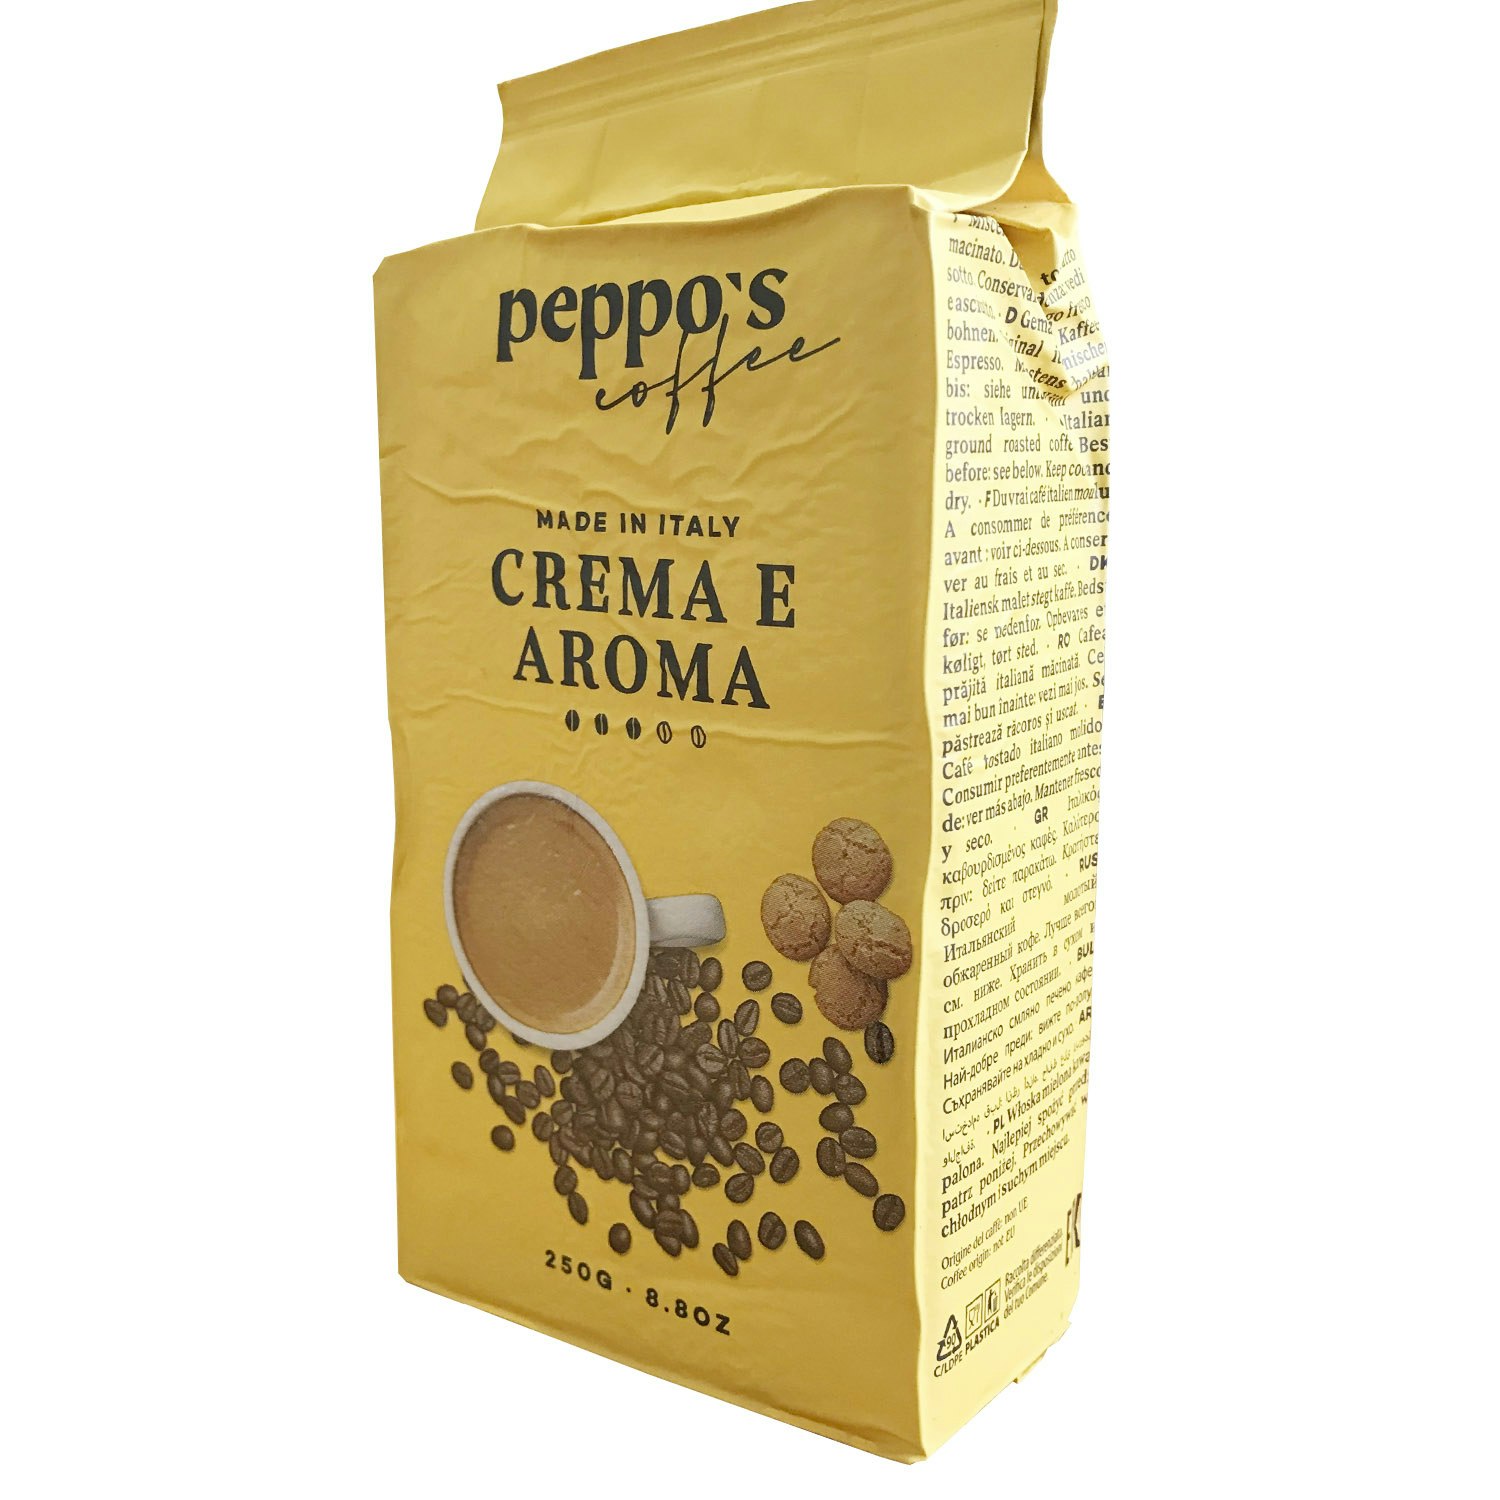 Peppo's Crema e Aroma 250g - malet kaffe - Italien